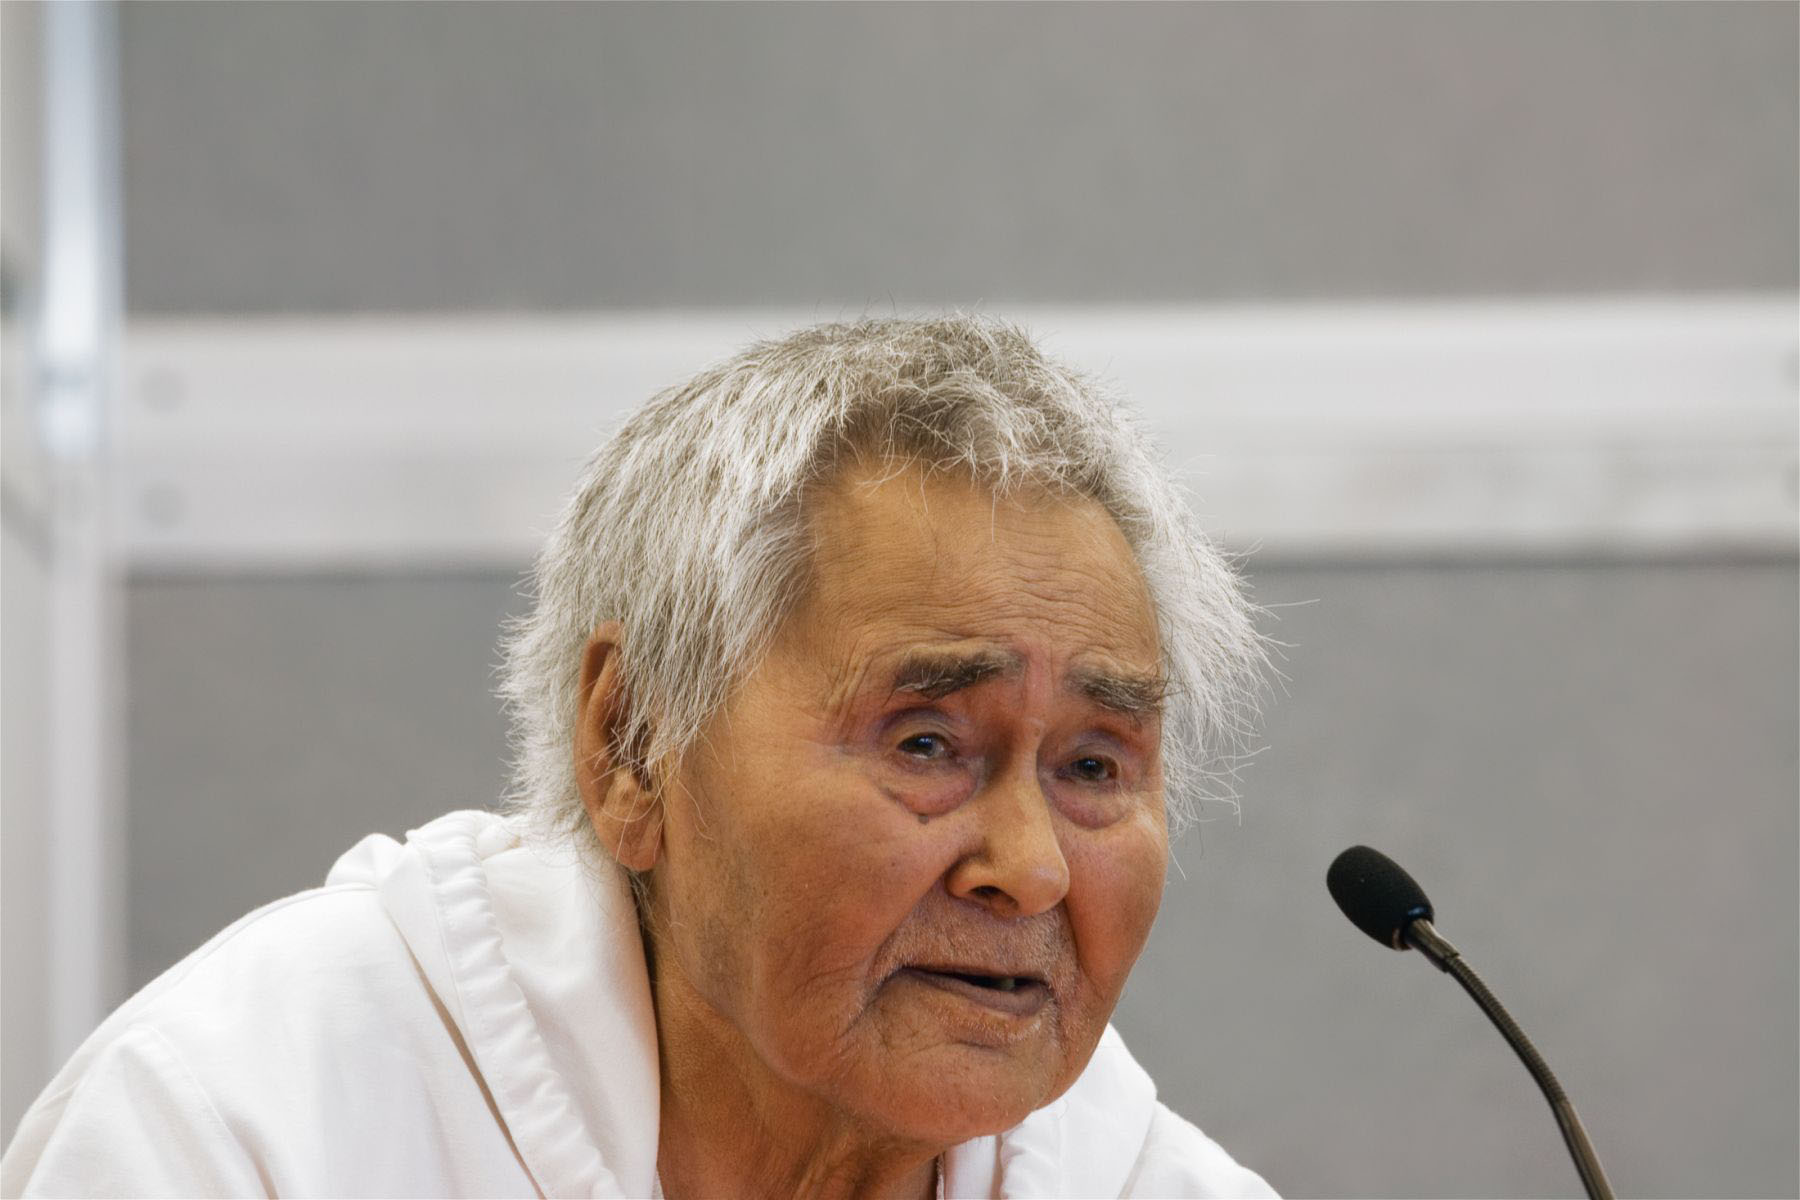 Naalak Nappaaluk, Inur Elder, Kangirsujuaq, Nunavik, Canada, 2005